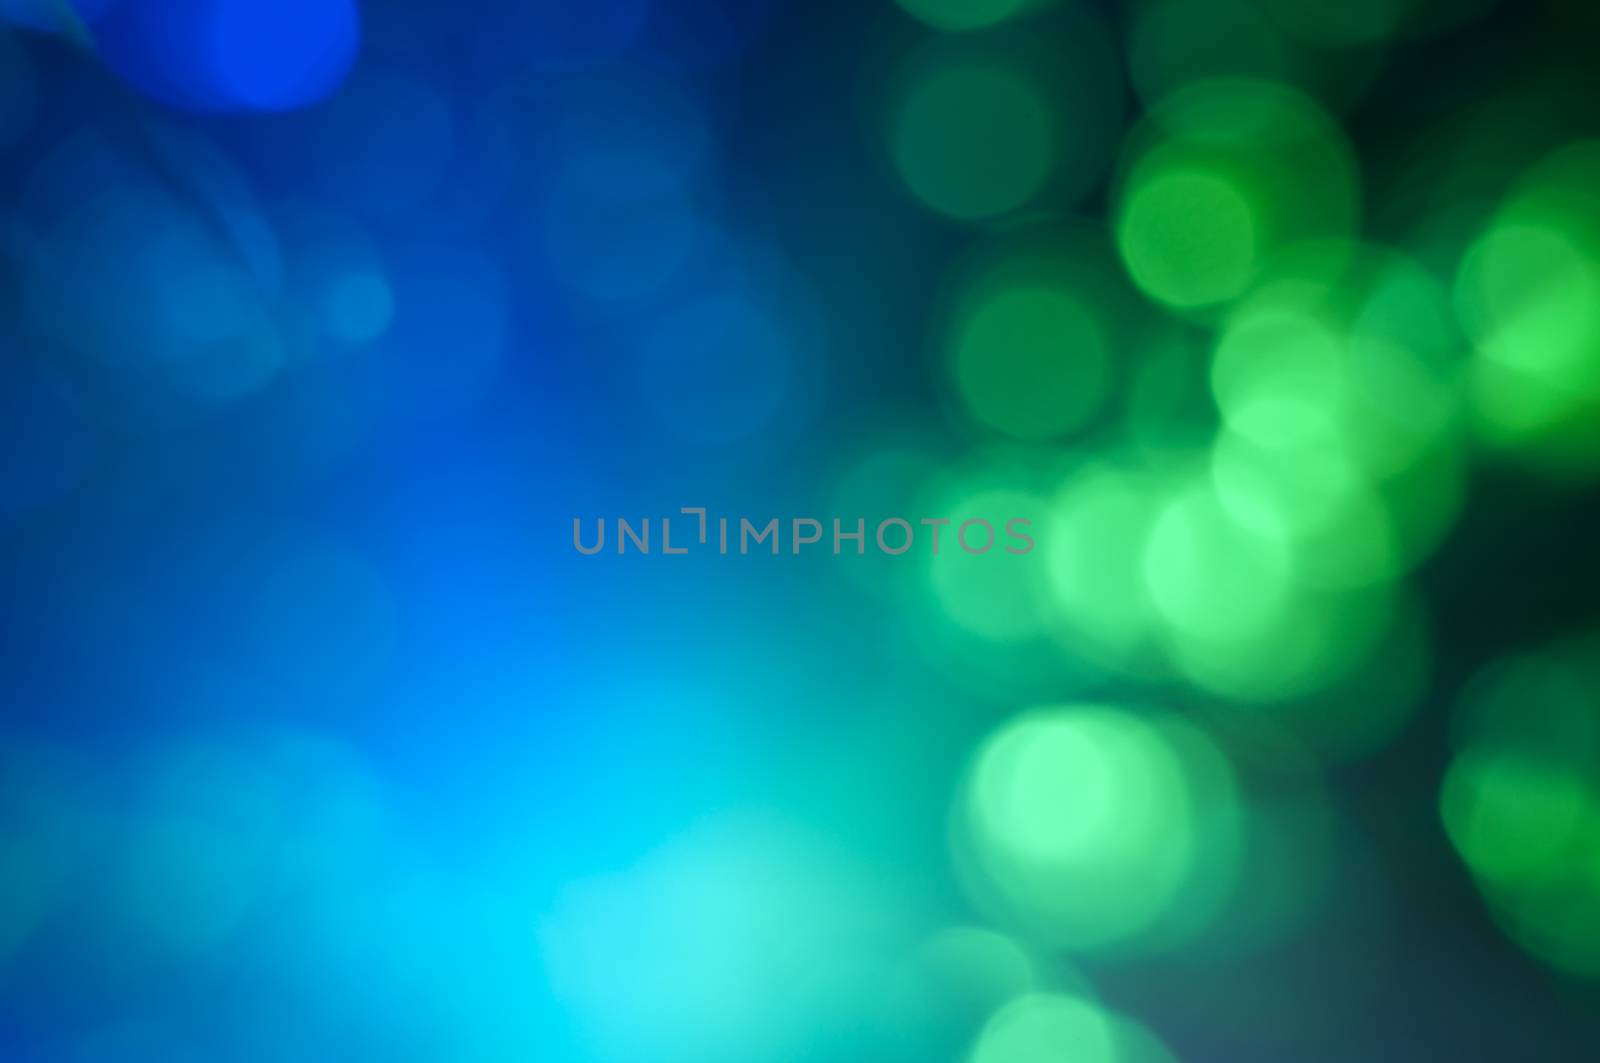 Abstract background blurry lights by deyan_georgiev